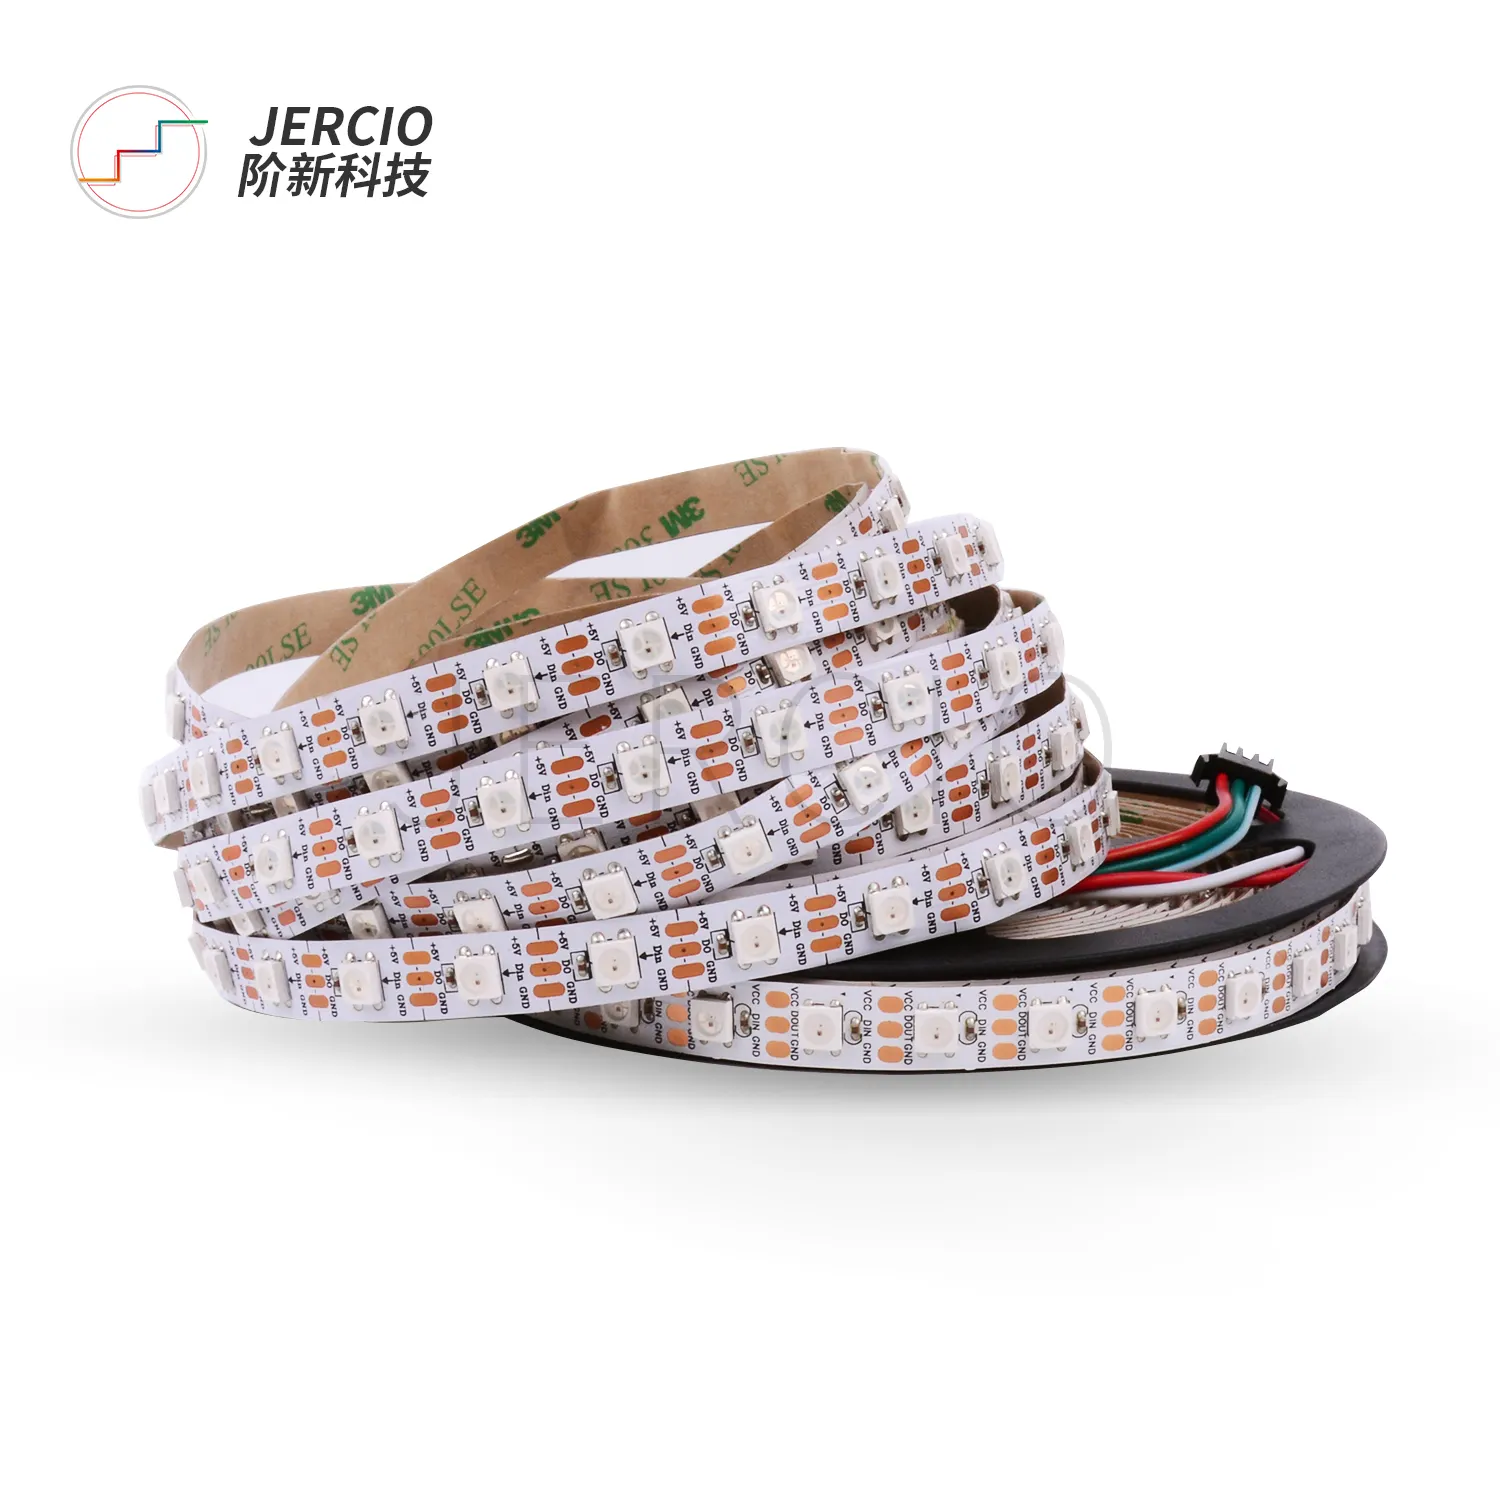 Jercio SK6812 / WS2812 / XT1511-RGB-5050 high brightness waterproof flexible led strip 30/60/74/96/144 LEDs/m